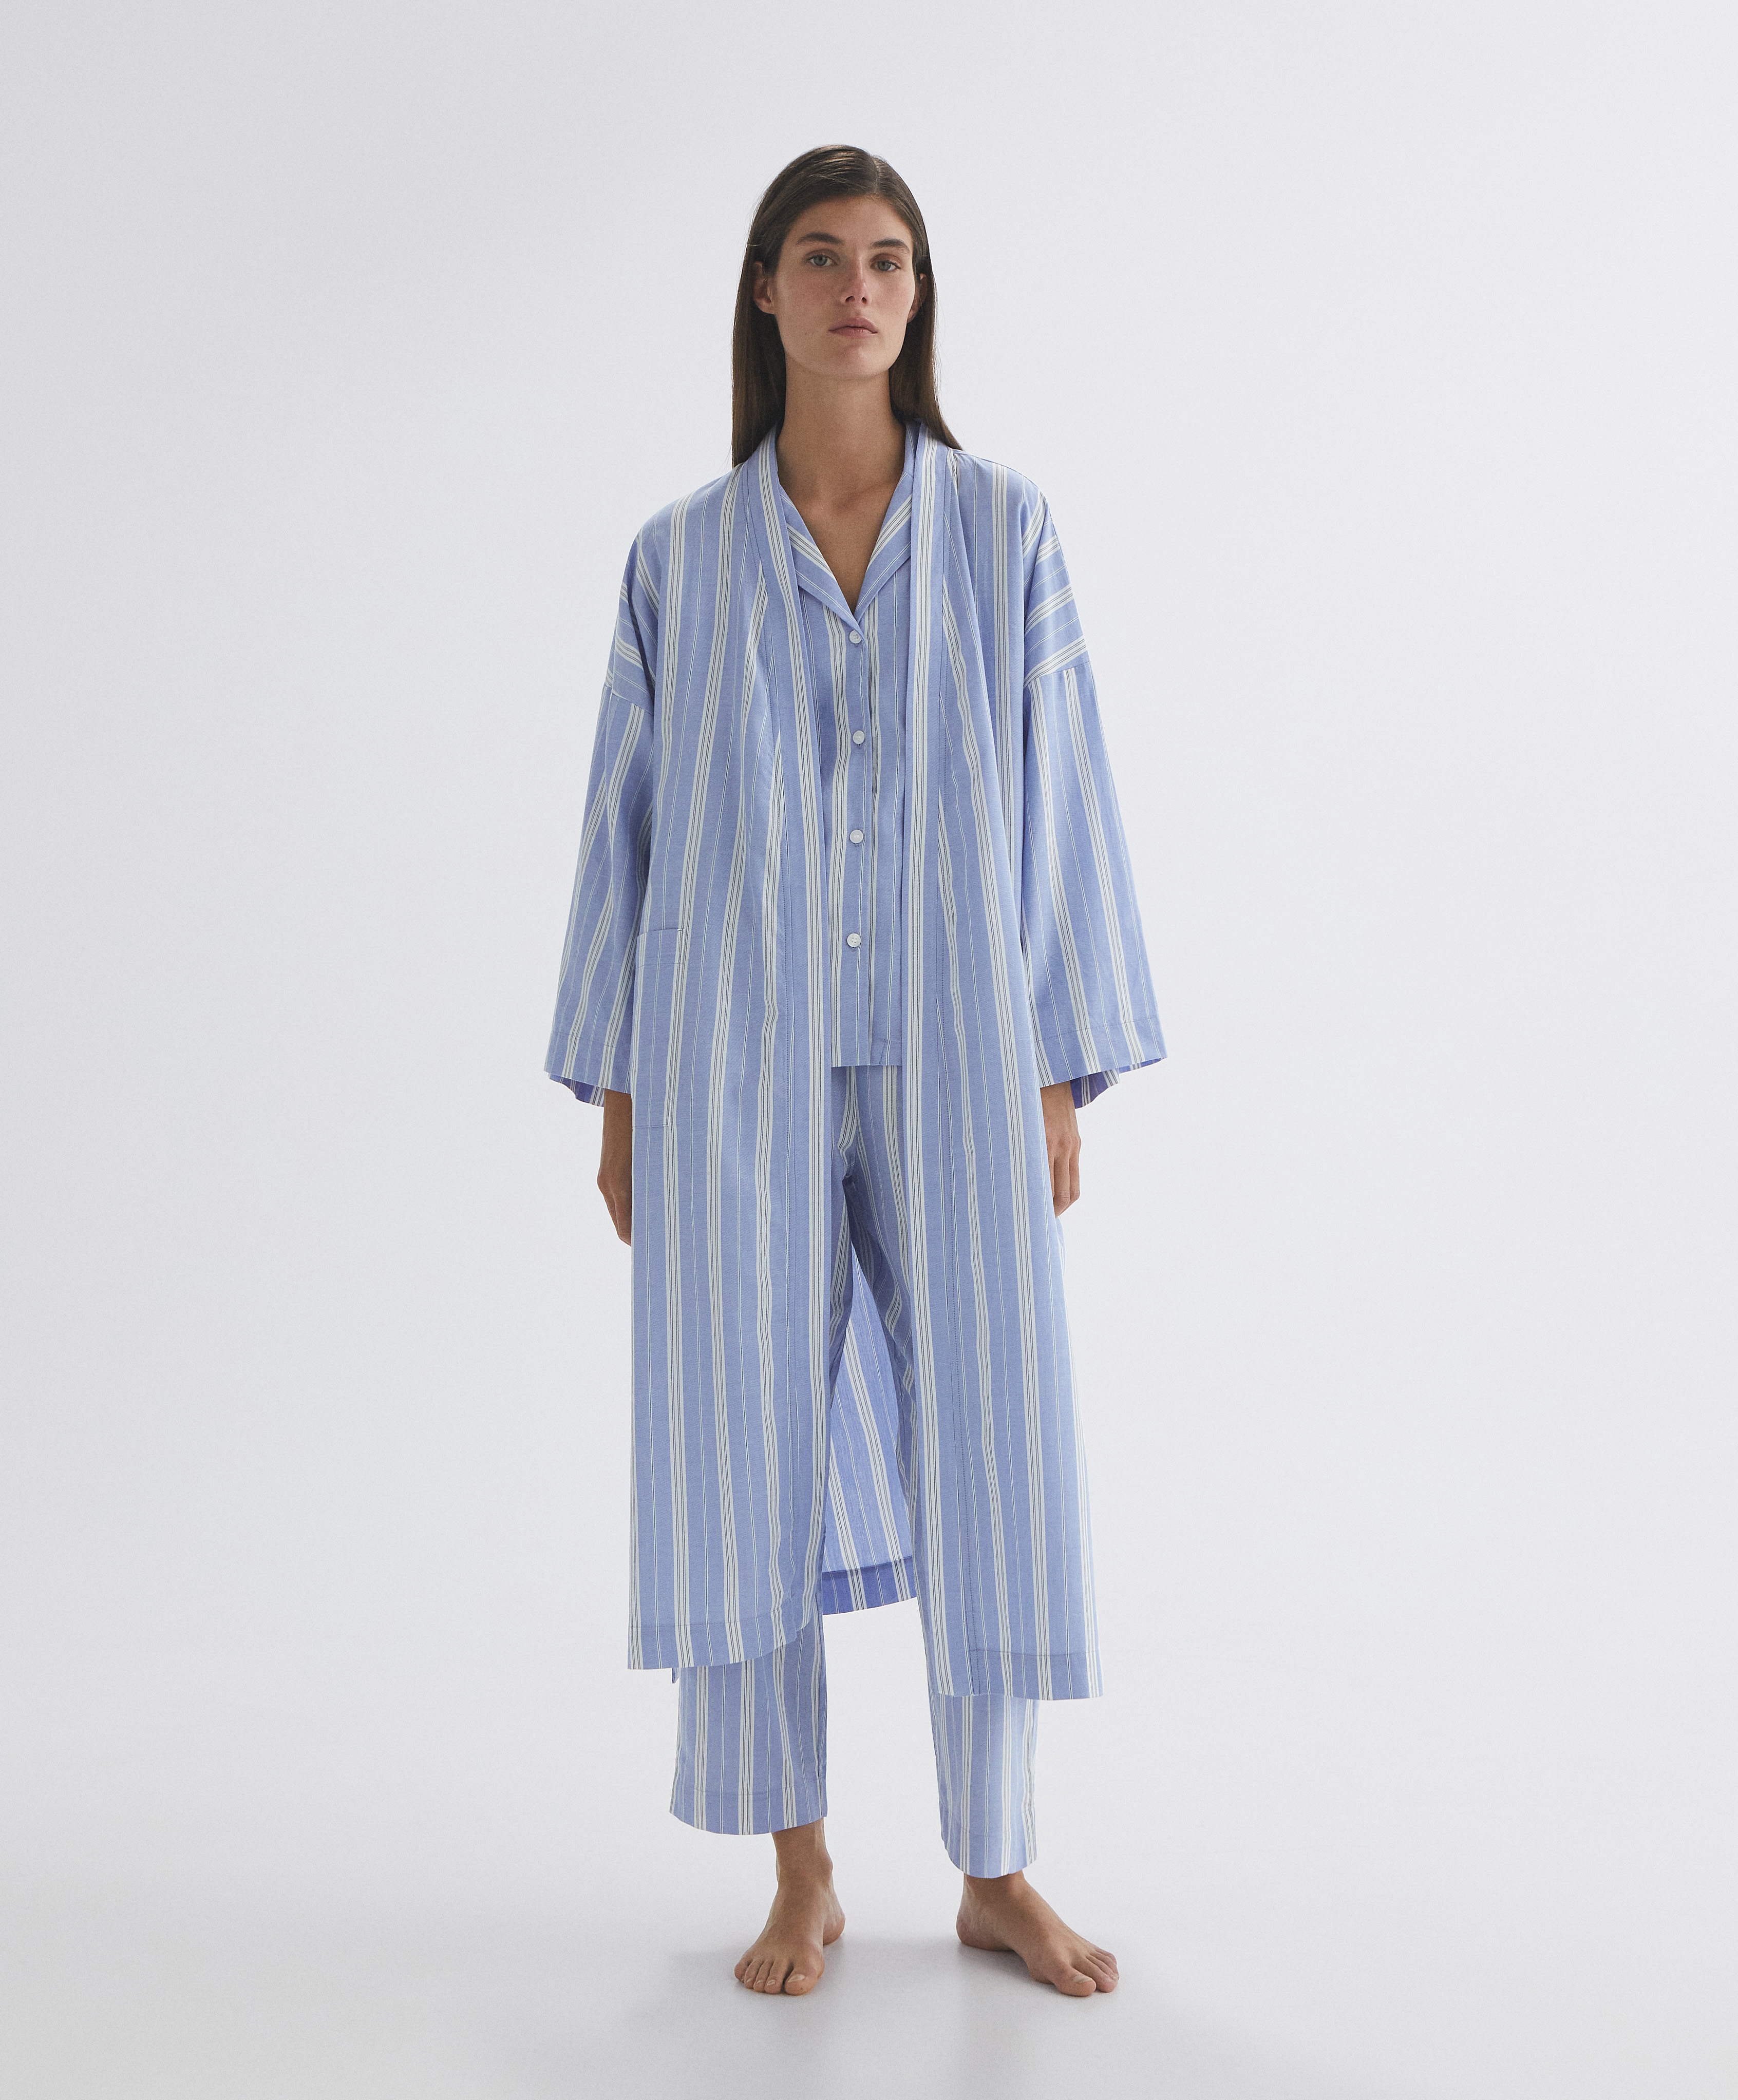 100% cotton stripe dressing gown